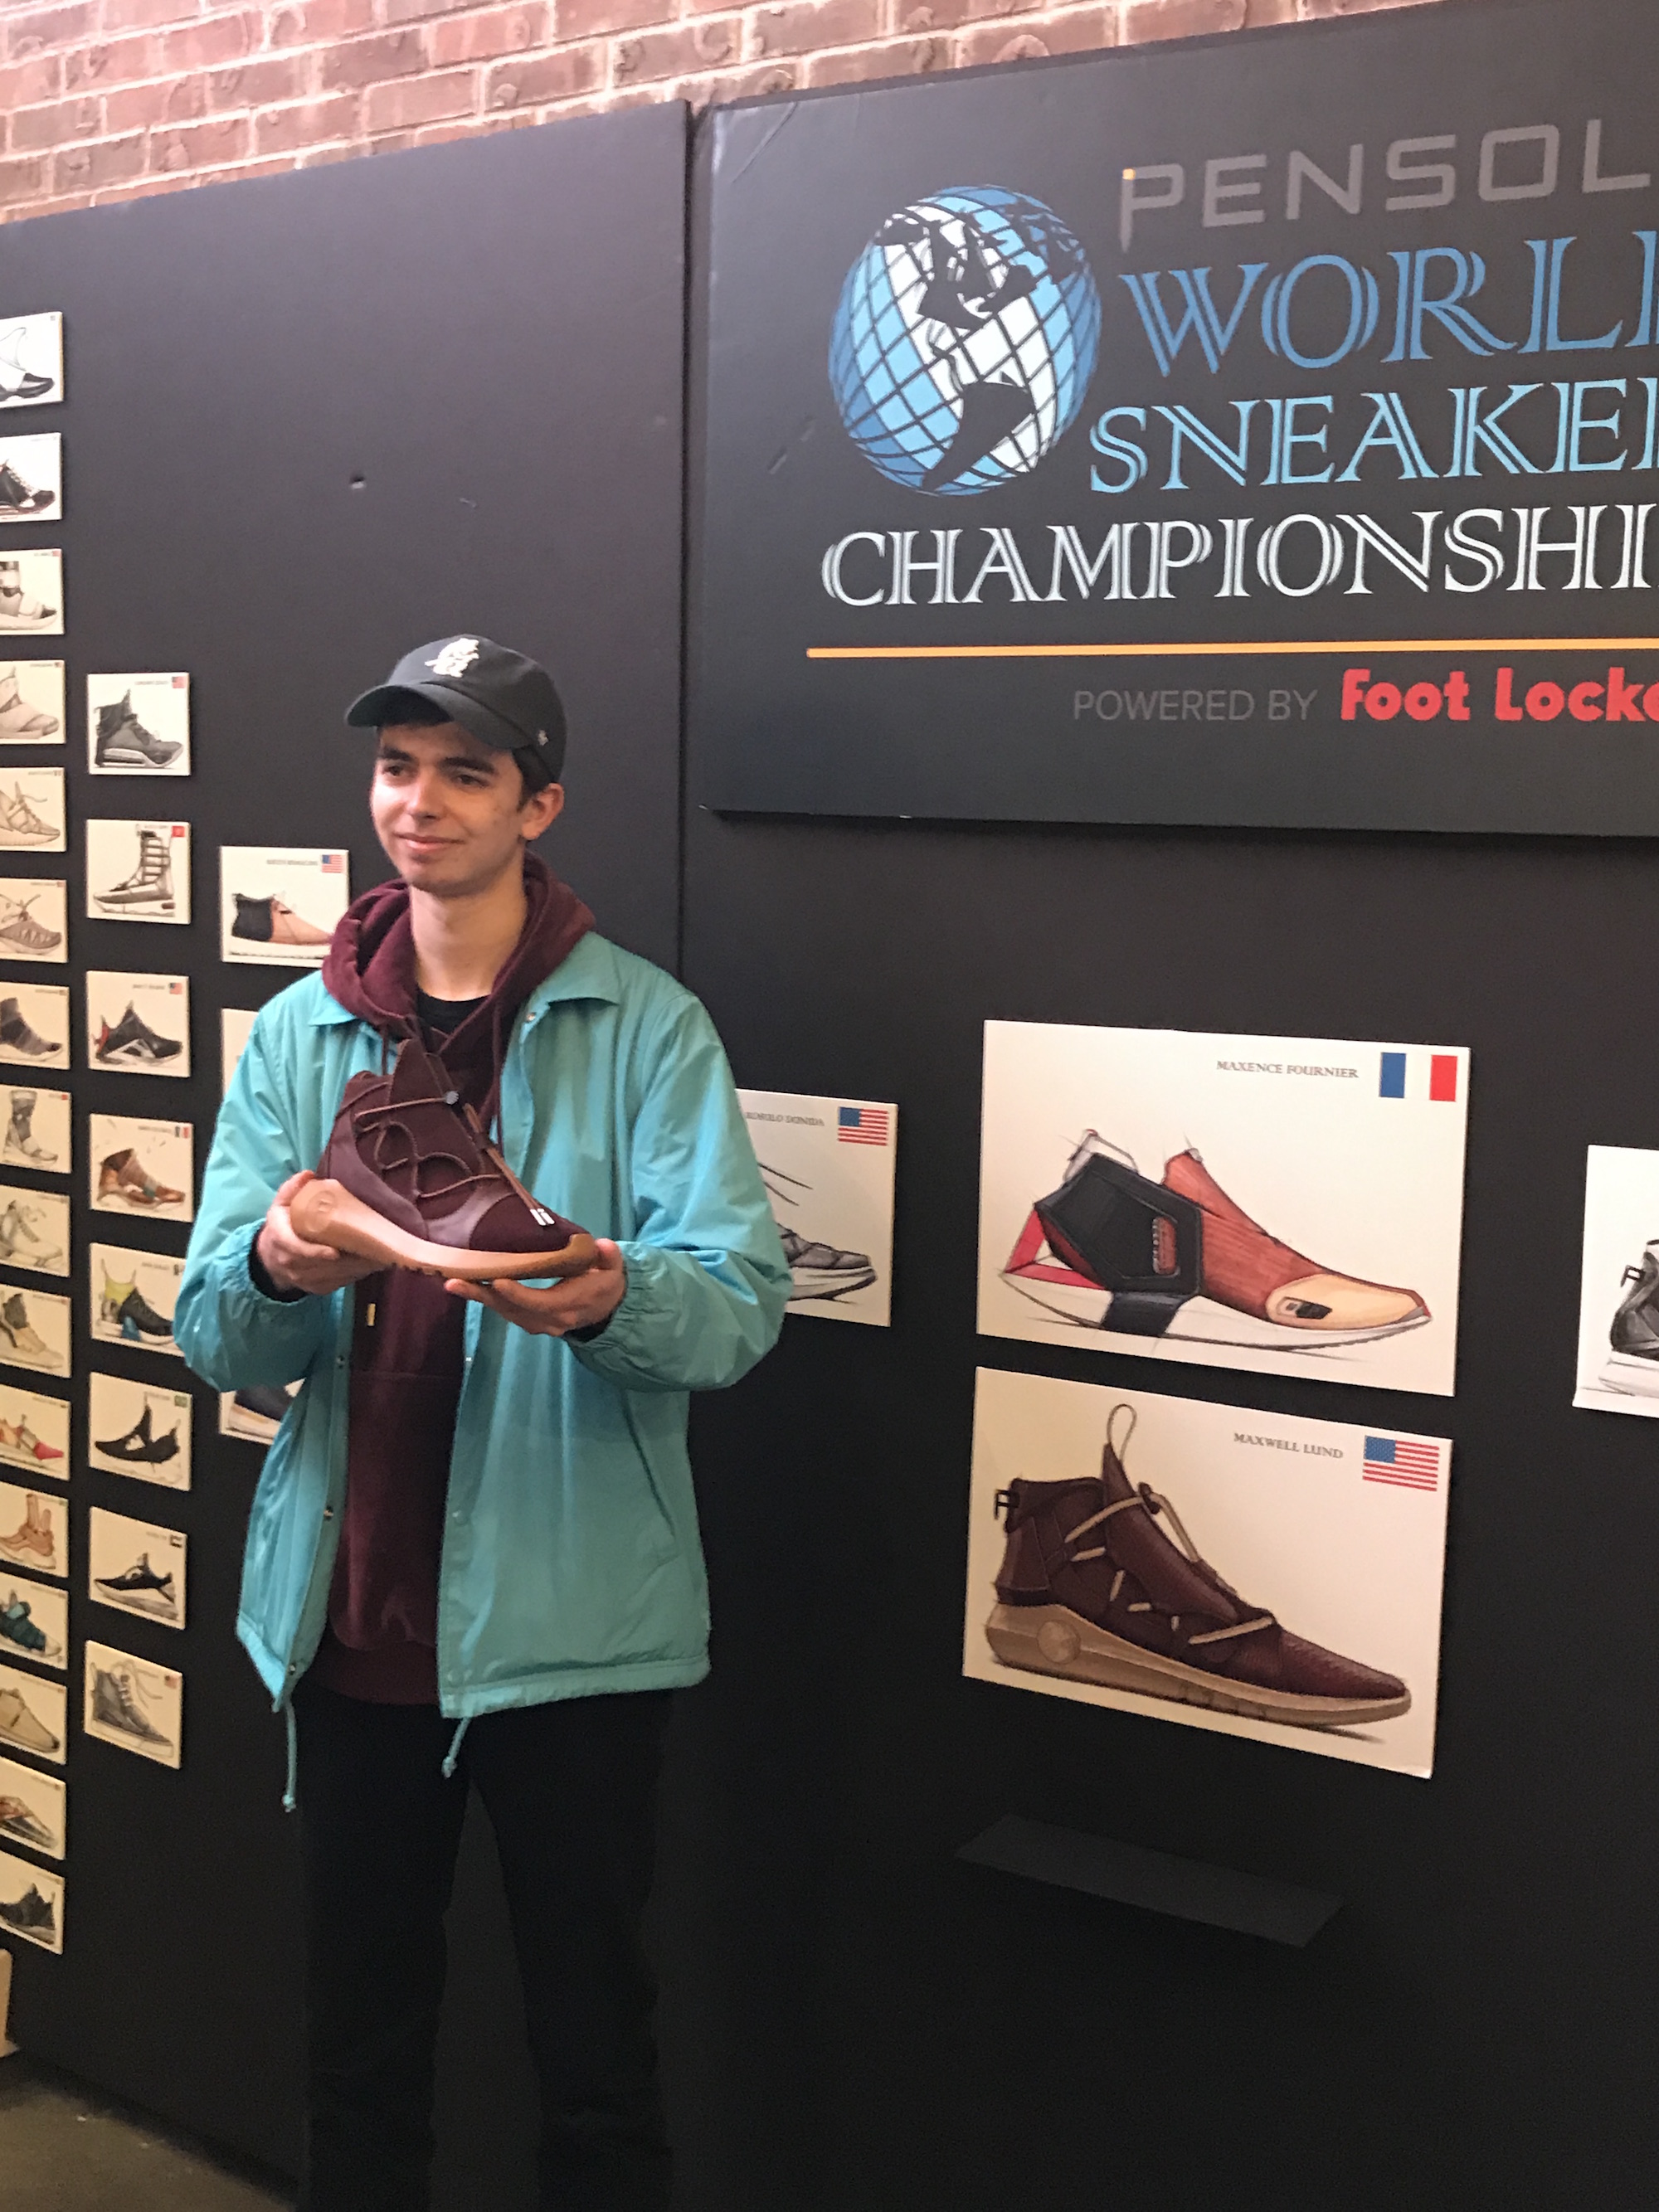 foot locker champion sneakers